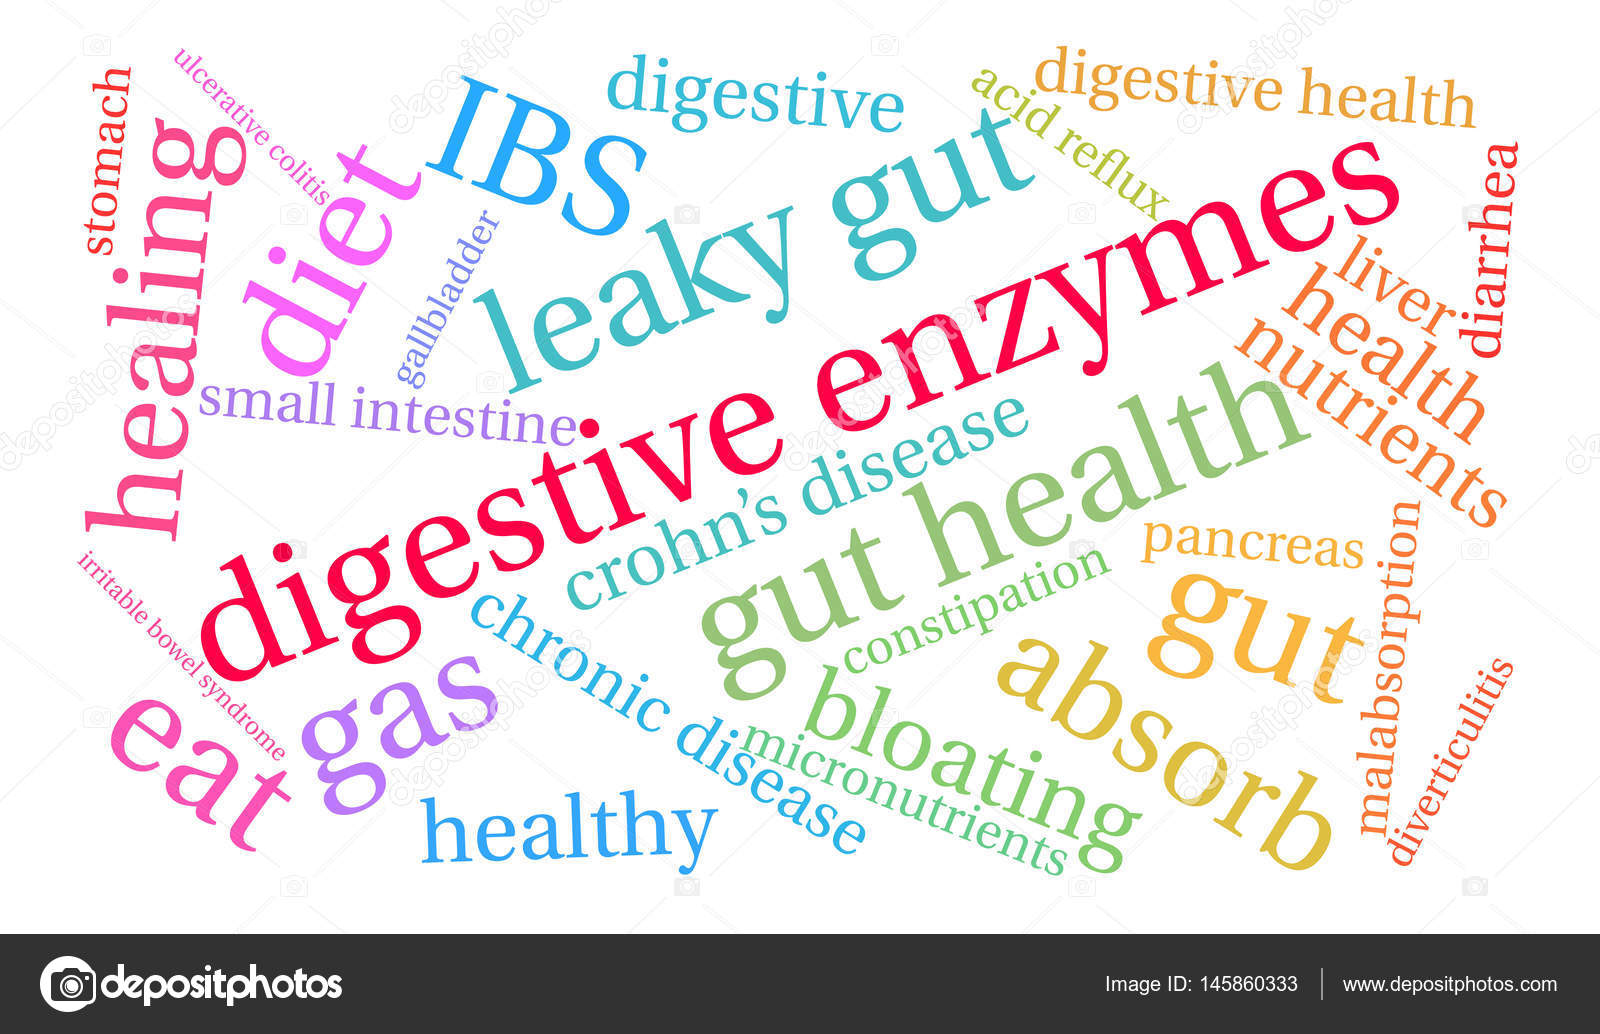 depositphotos_145860333-stock-illustration-digestive-enzymes-word-cloud